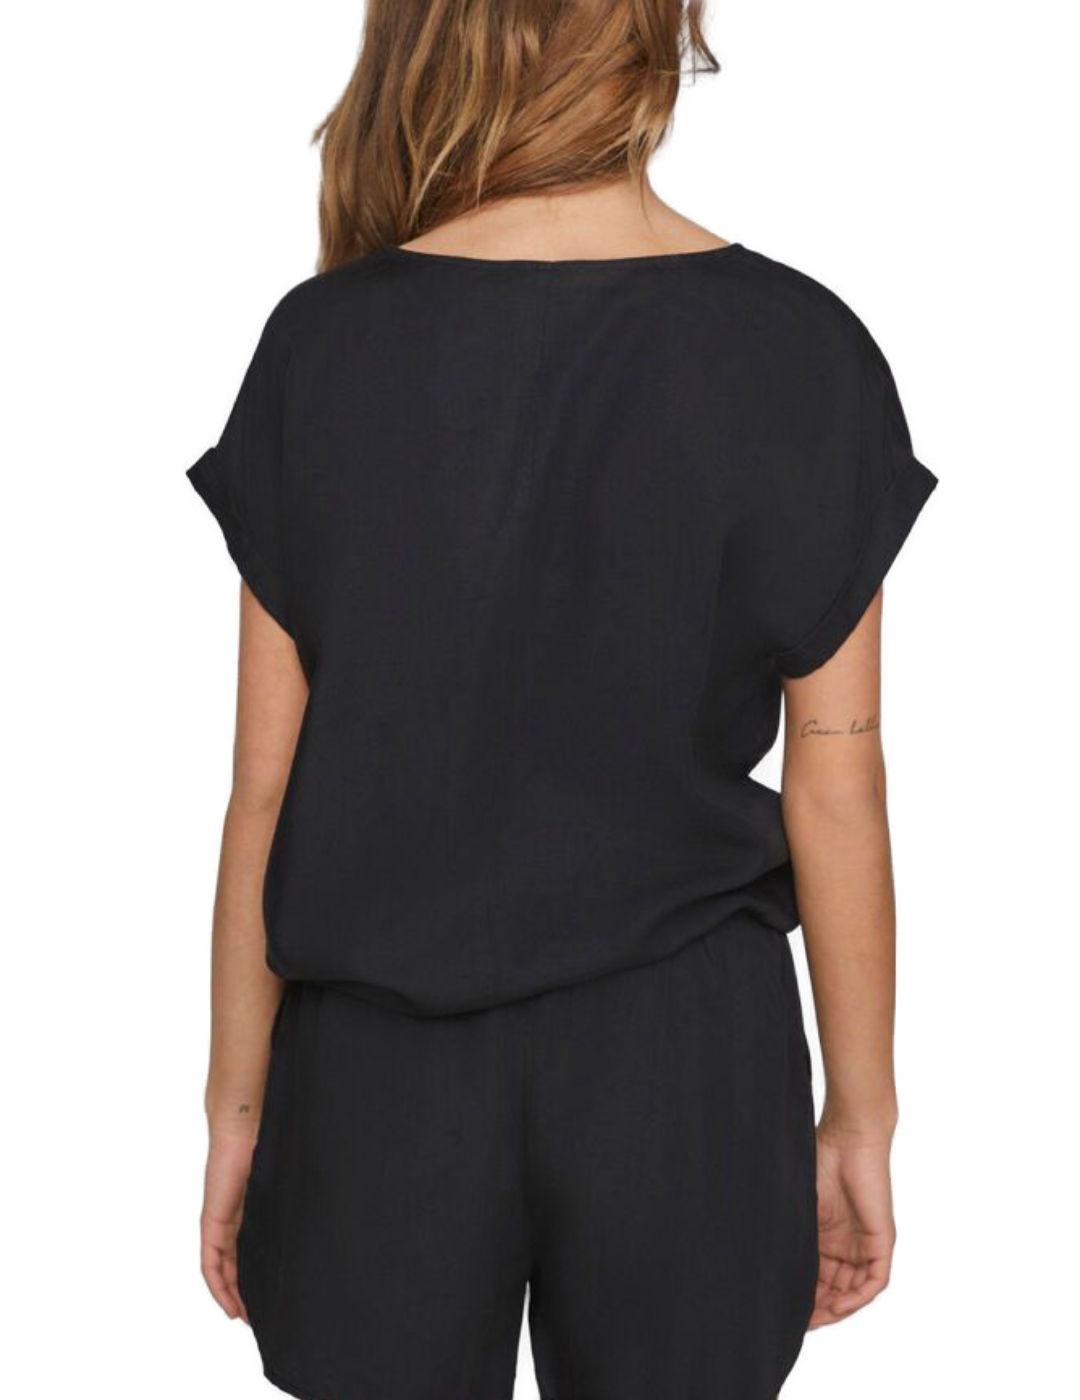 Camiseta Vila Misti negro manga corta para mujer